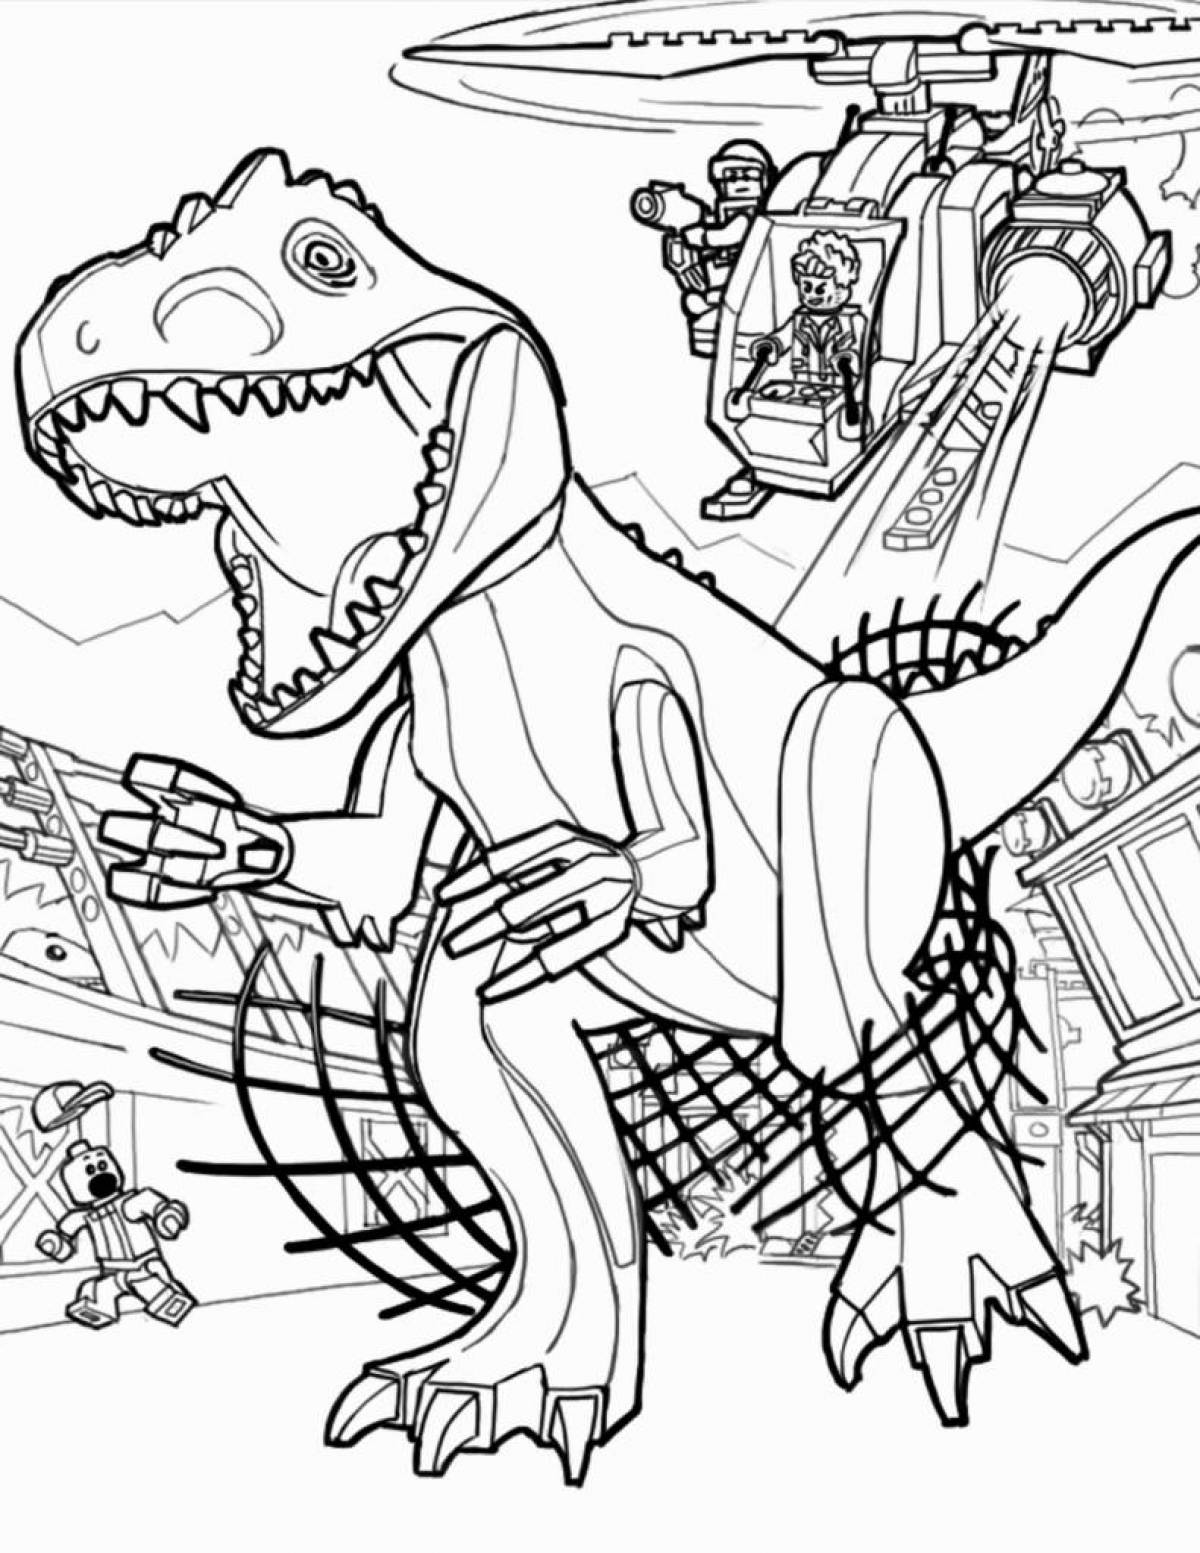 Fun Jurassic World coloring book